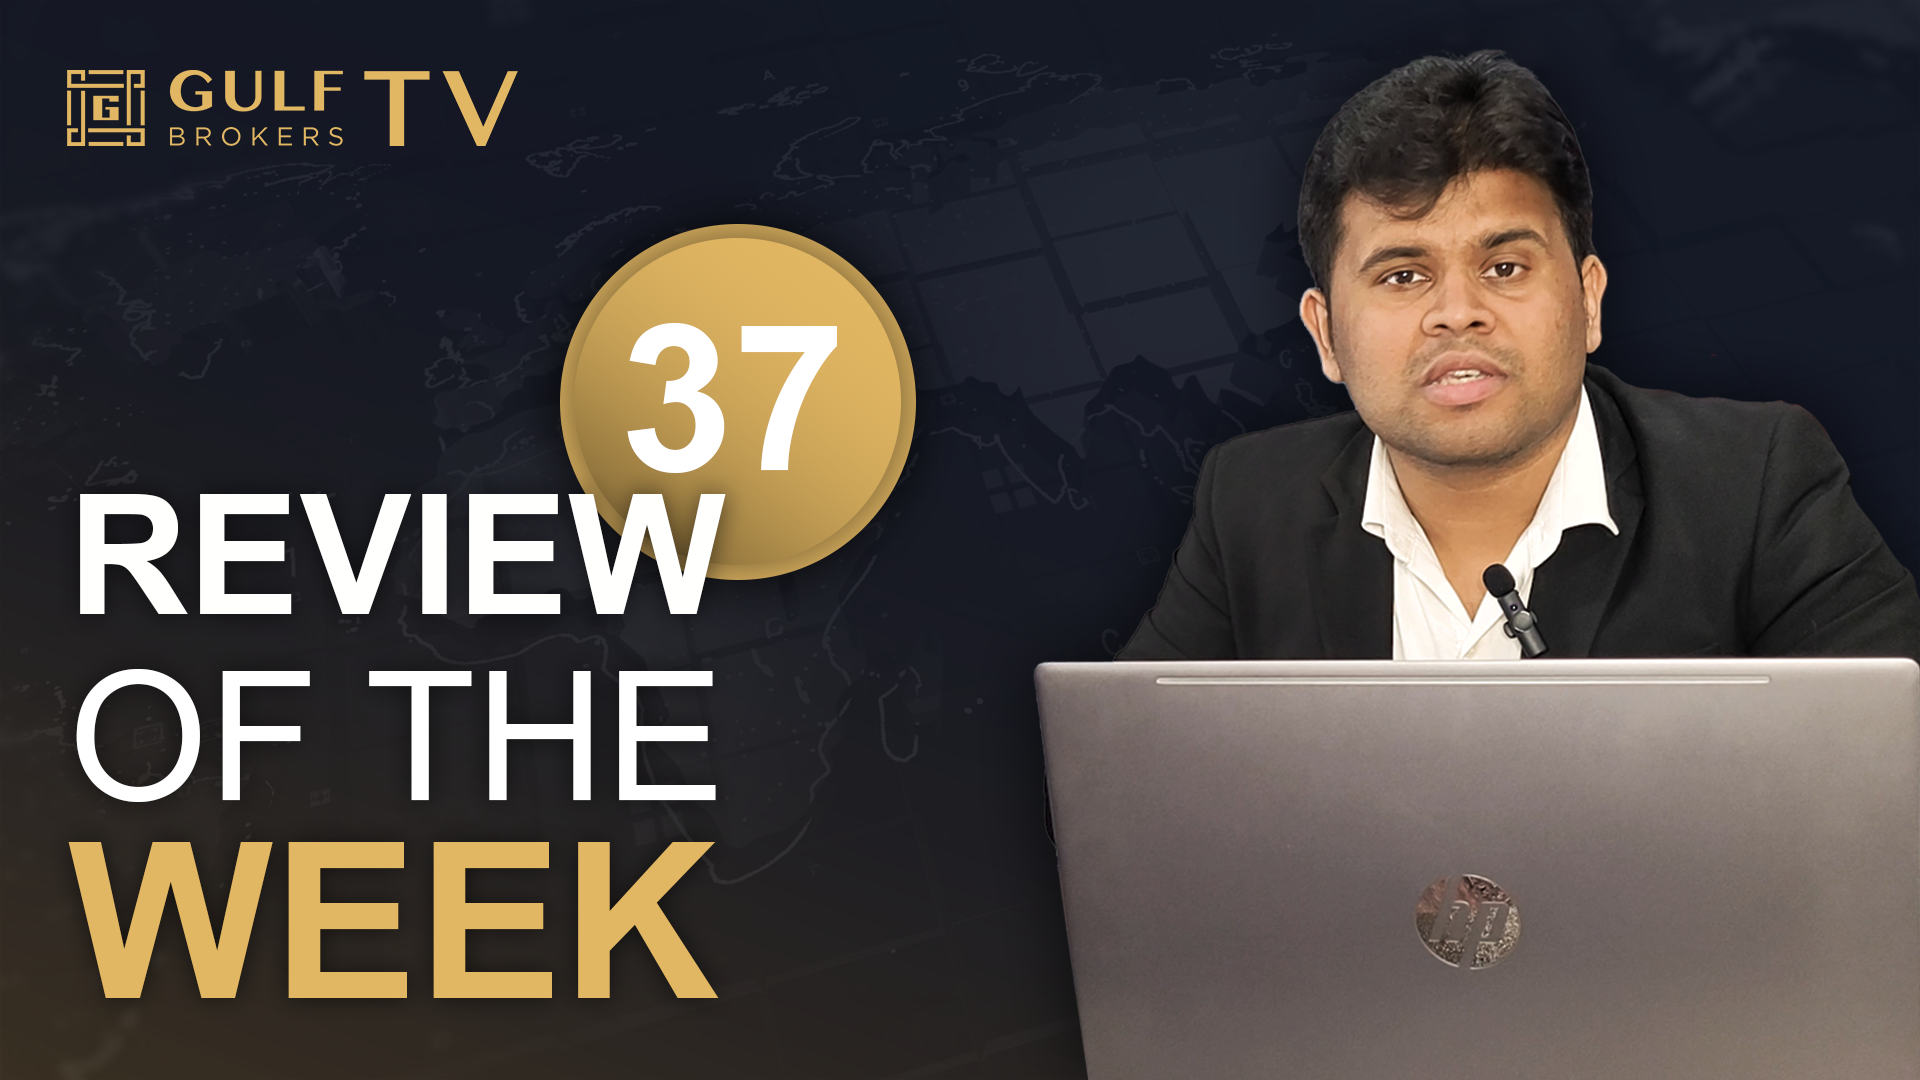 Gulfbrokers | Gulf Brokers | Review of the week 37 | Syam KP